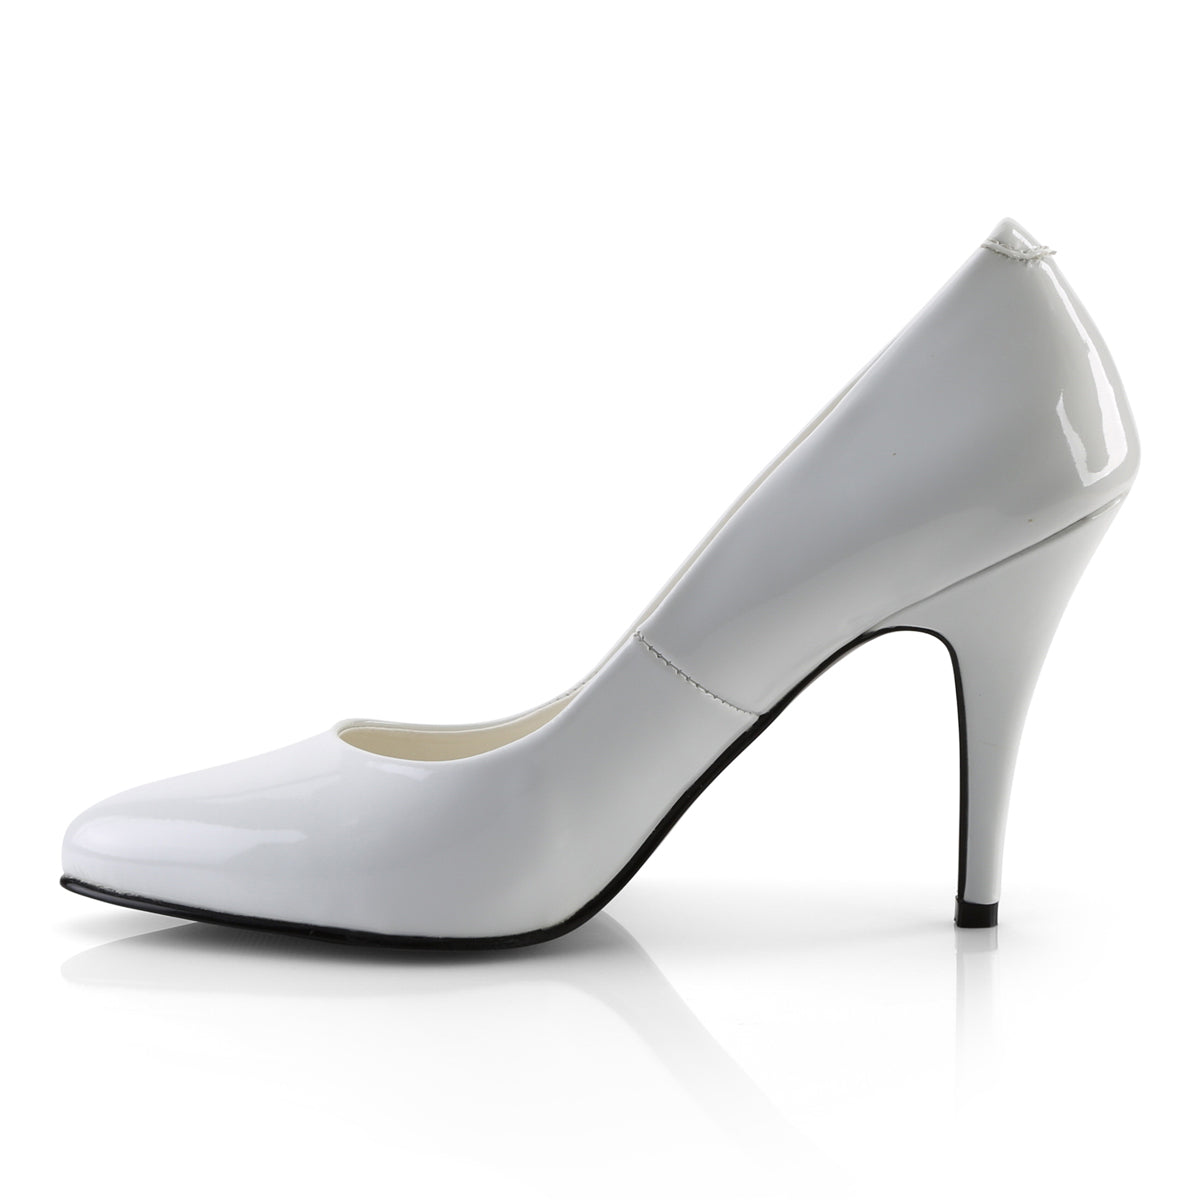 VANITY-420 Pleaser Shoe 4" Heel White Patent Fetish Footwear-Pleaser- Sexy Shoes Pole Dance Heels